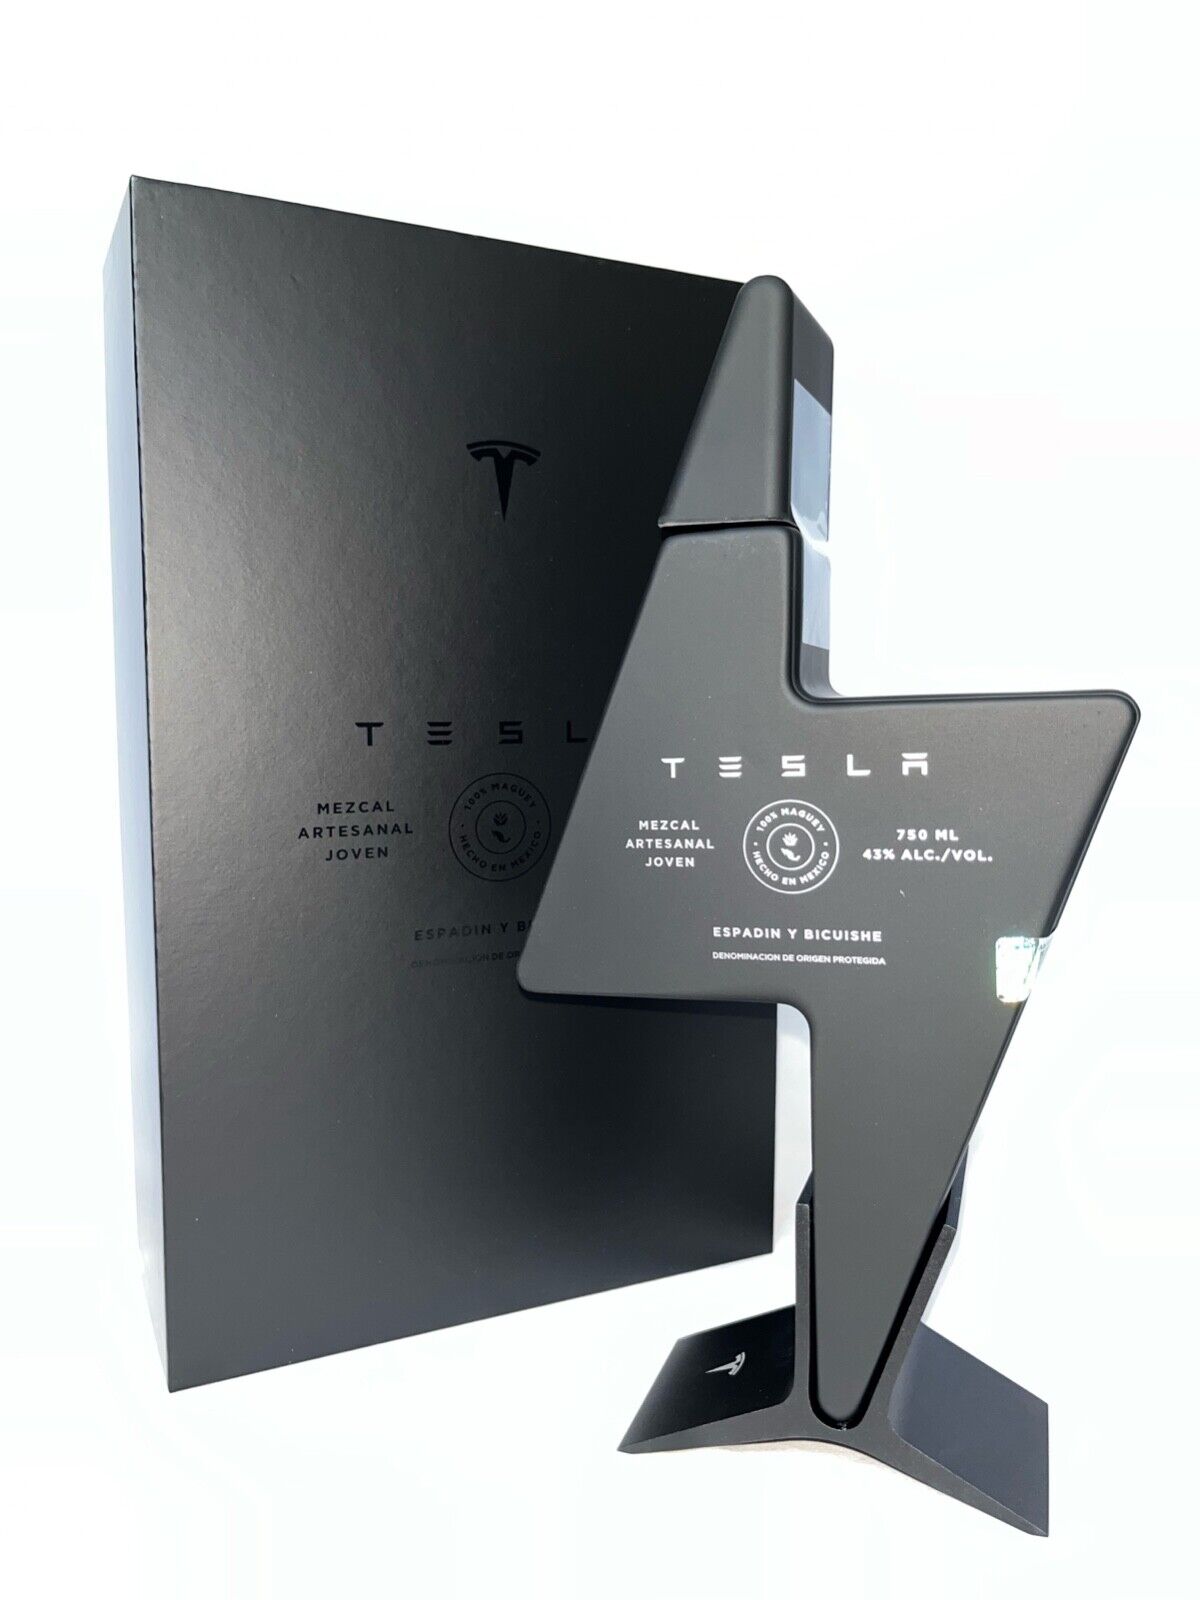 Tesla Mezcal Decanter Bottle & Stand Limited Edition Original Box. No Alcohol. 